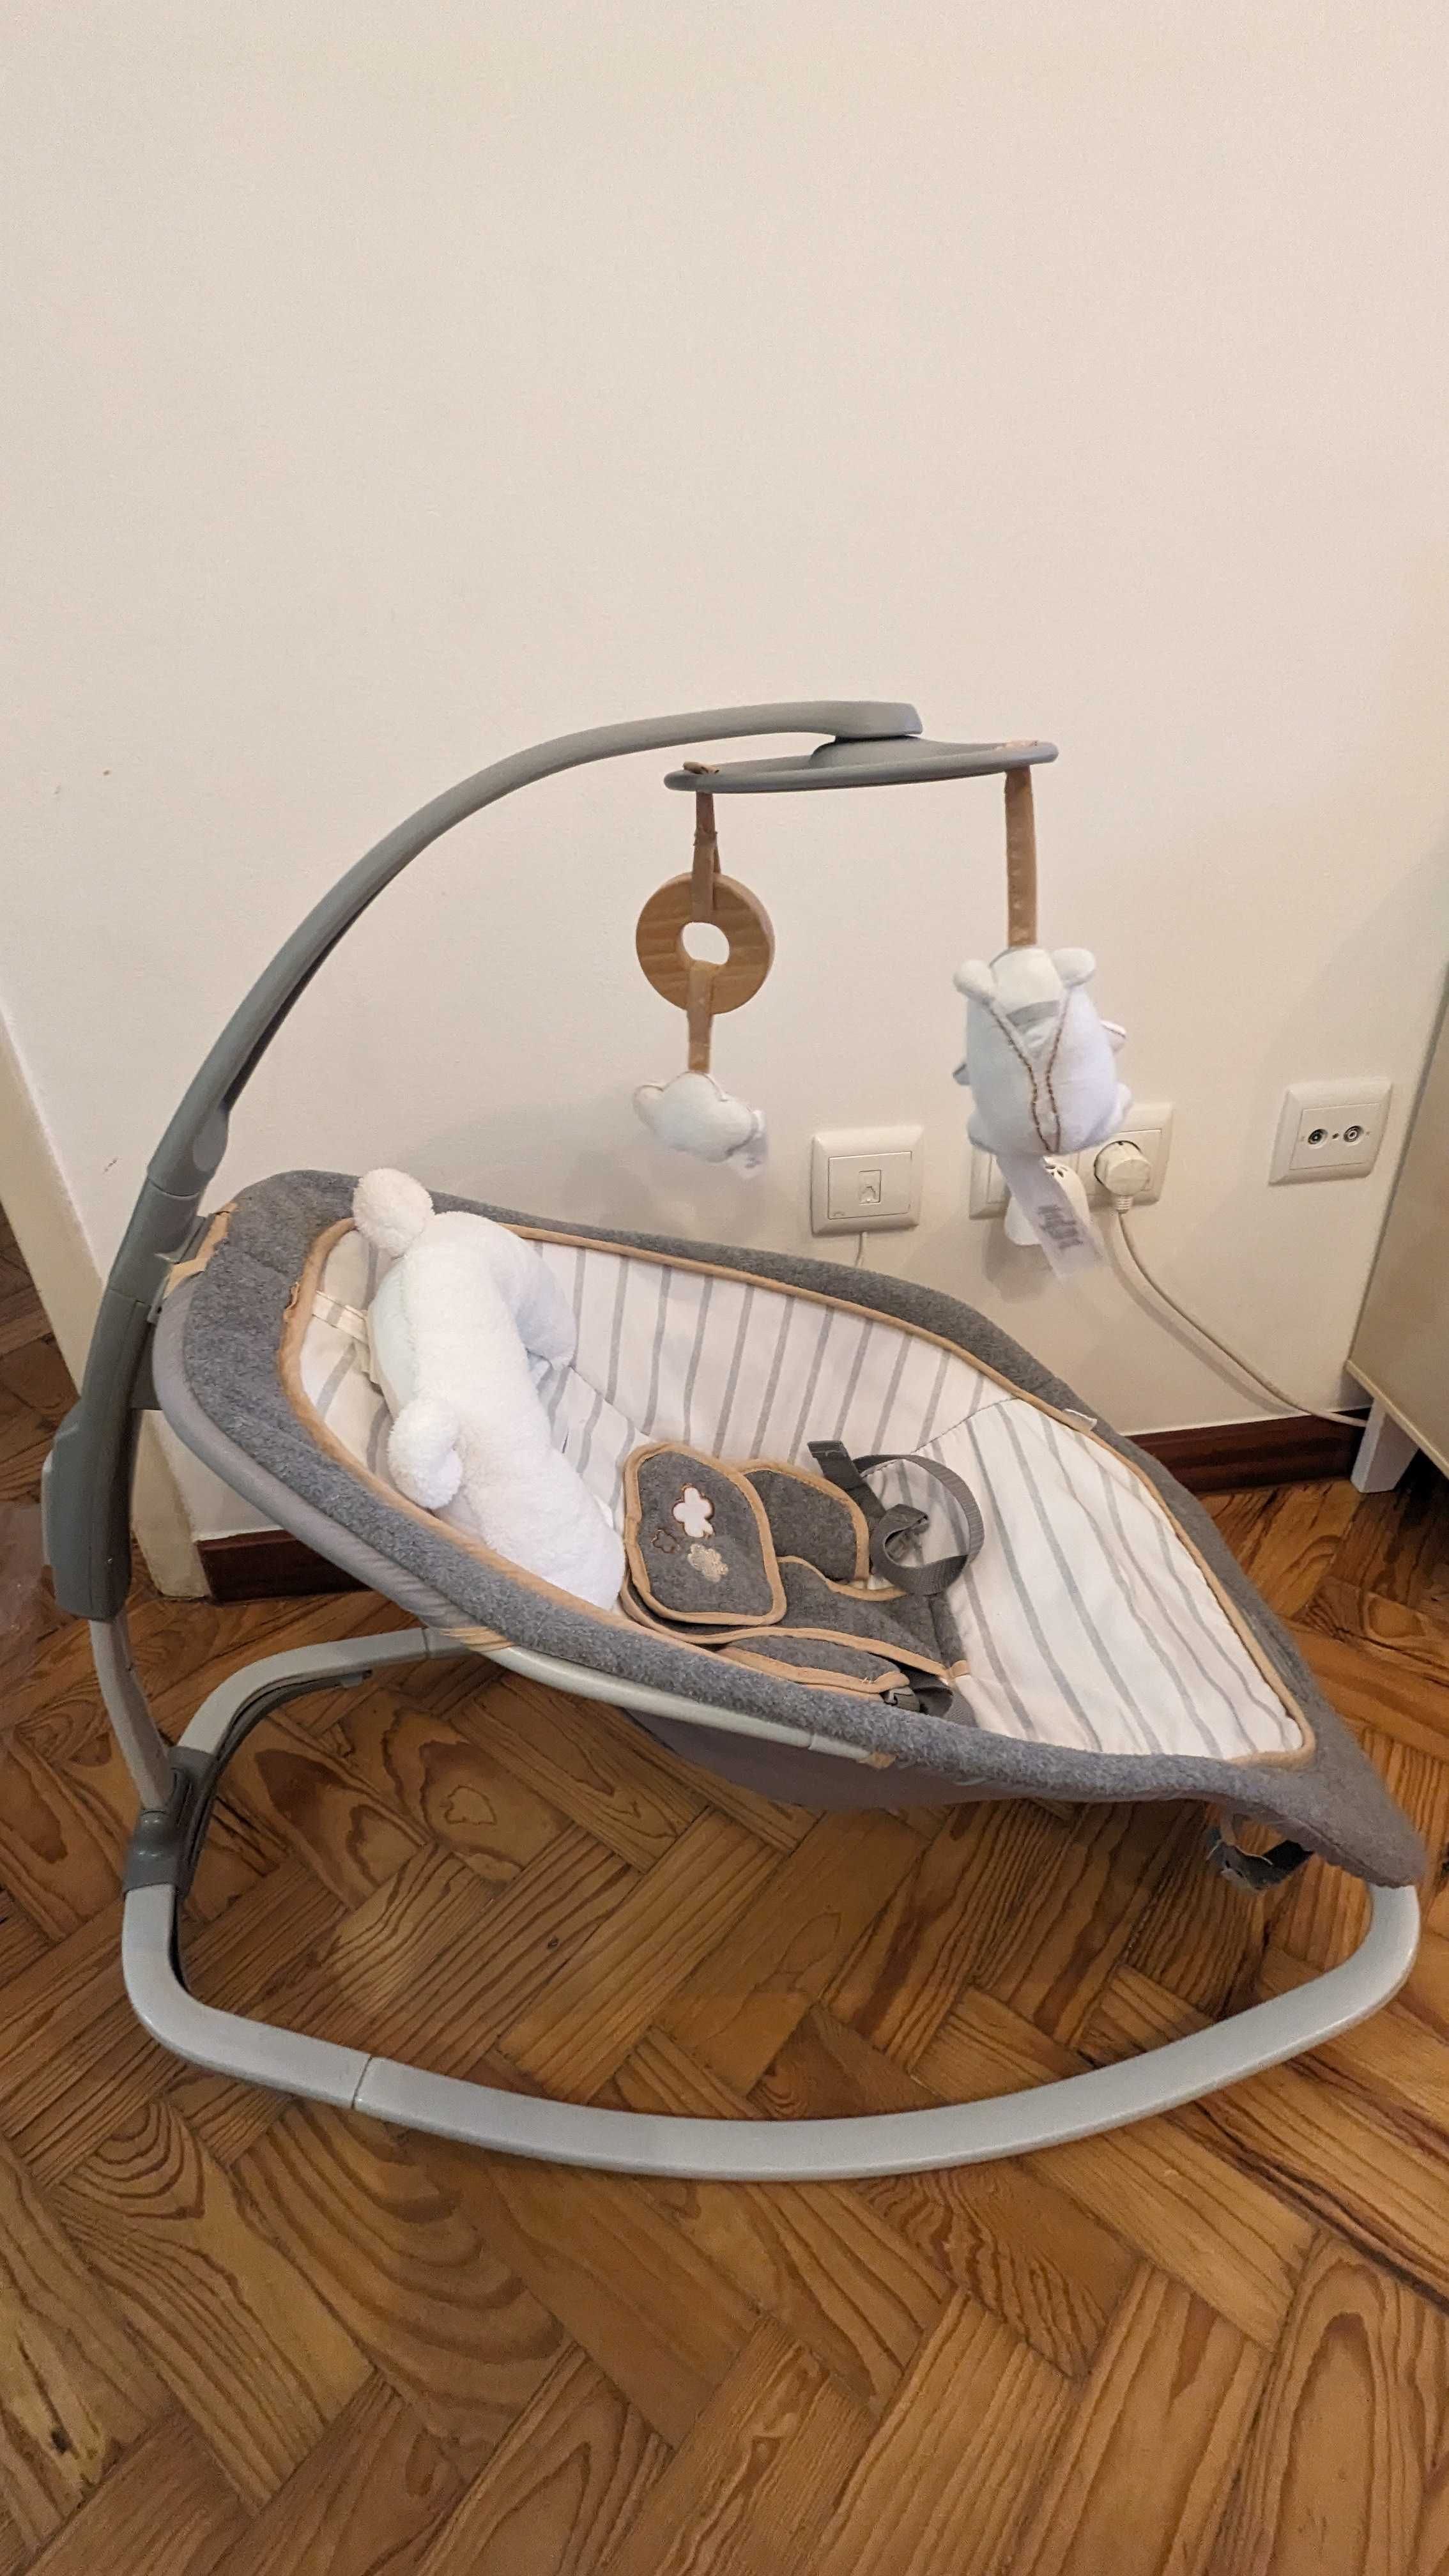 Ingenuity Baloiço de bebé - Espreguiçadeira - rocking seat